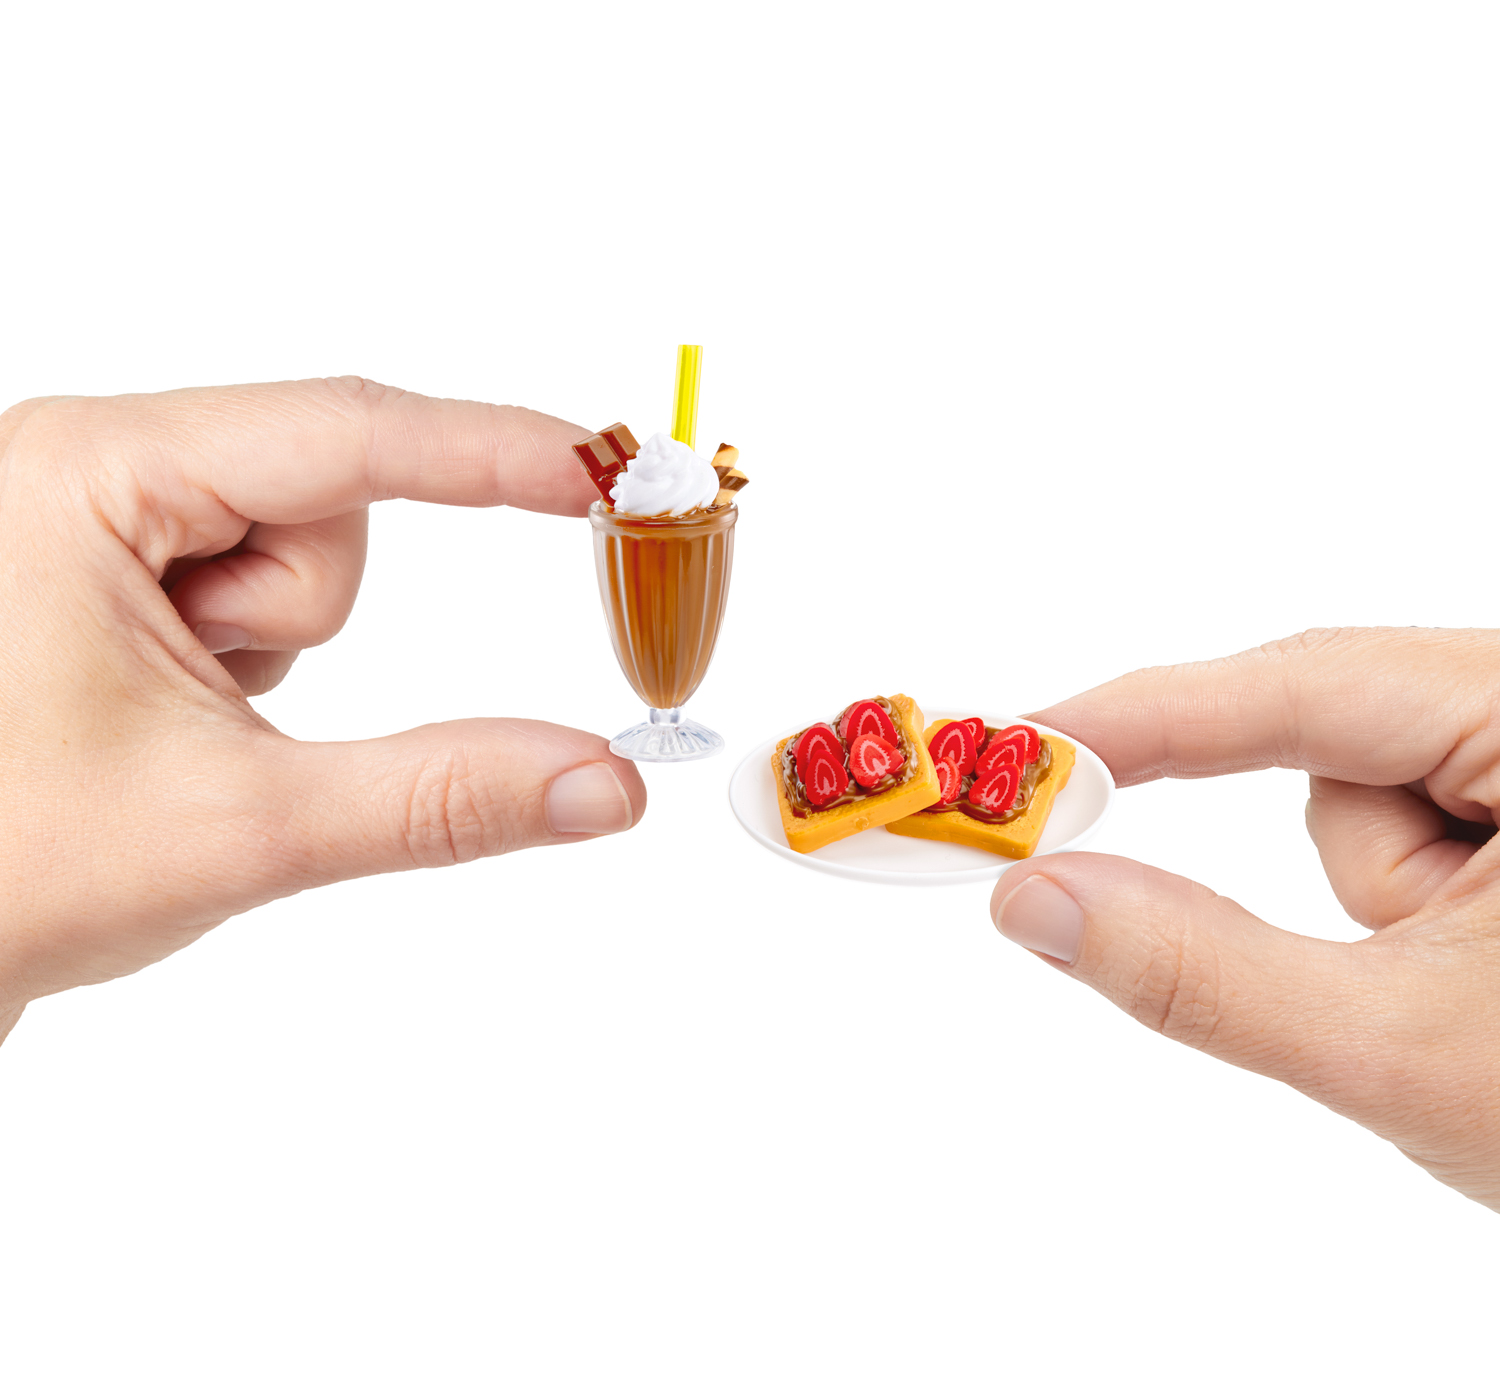 MGA's Miniverse - Make It Mini Food Diner Series 1 Minis